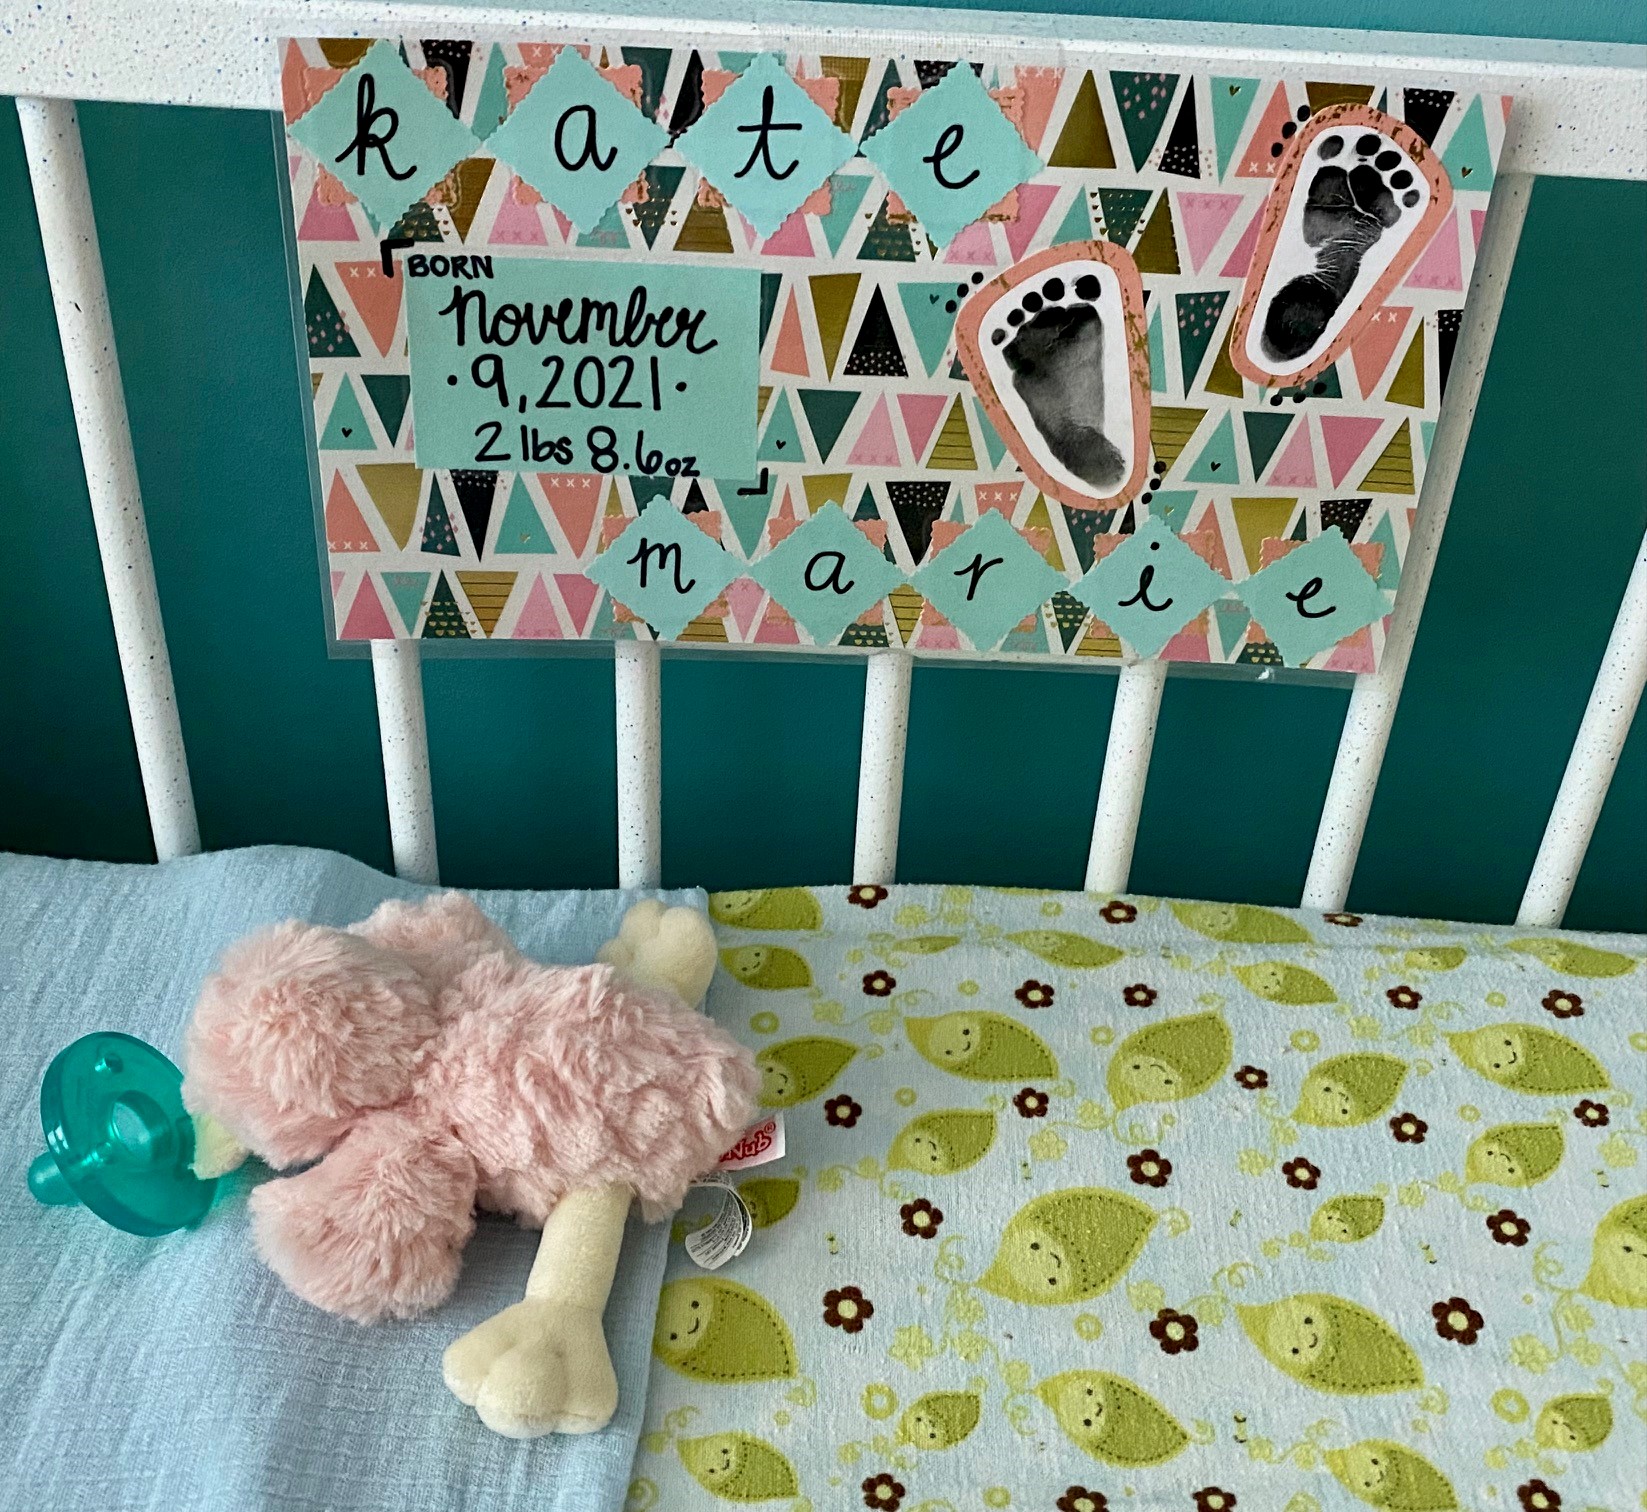 Baby Kate Noe's crib.